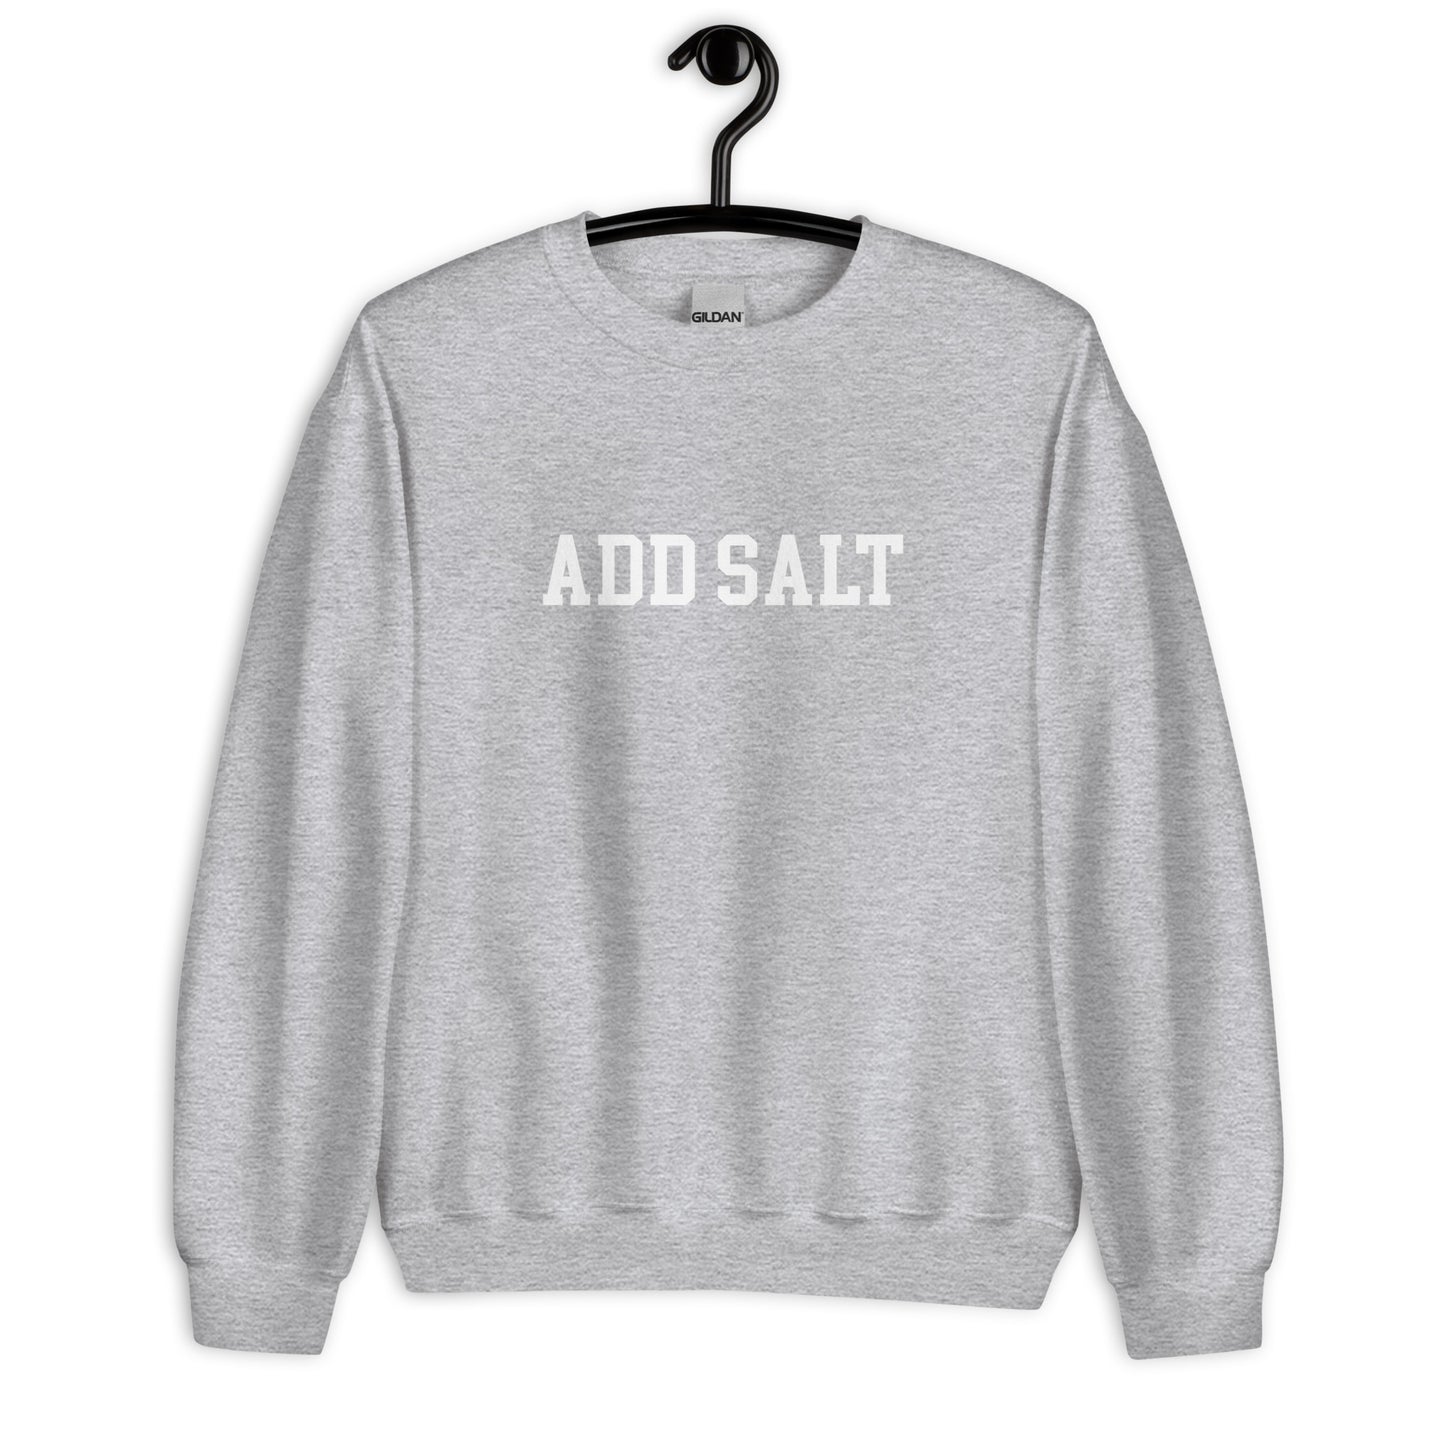 Add Salt Sweatshirt - Straight Font